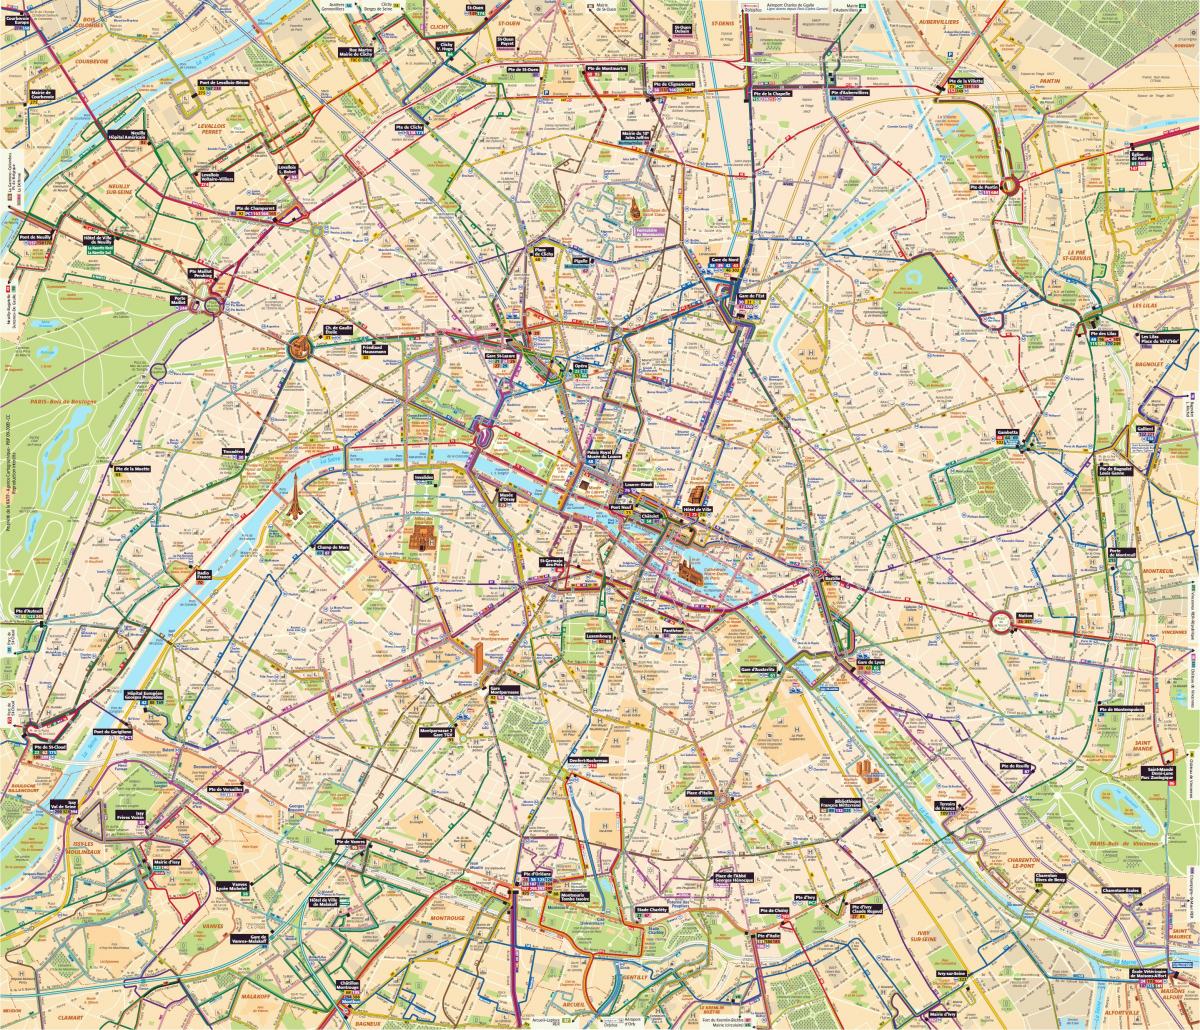 Mappa di Parigi in autobus